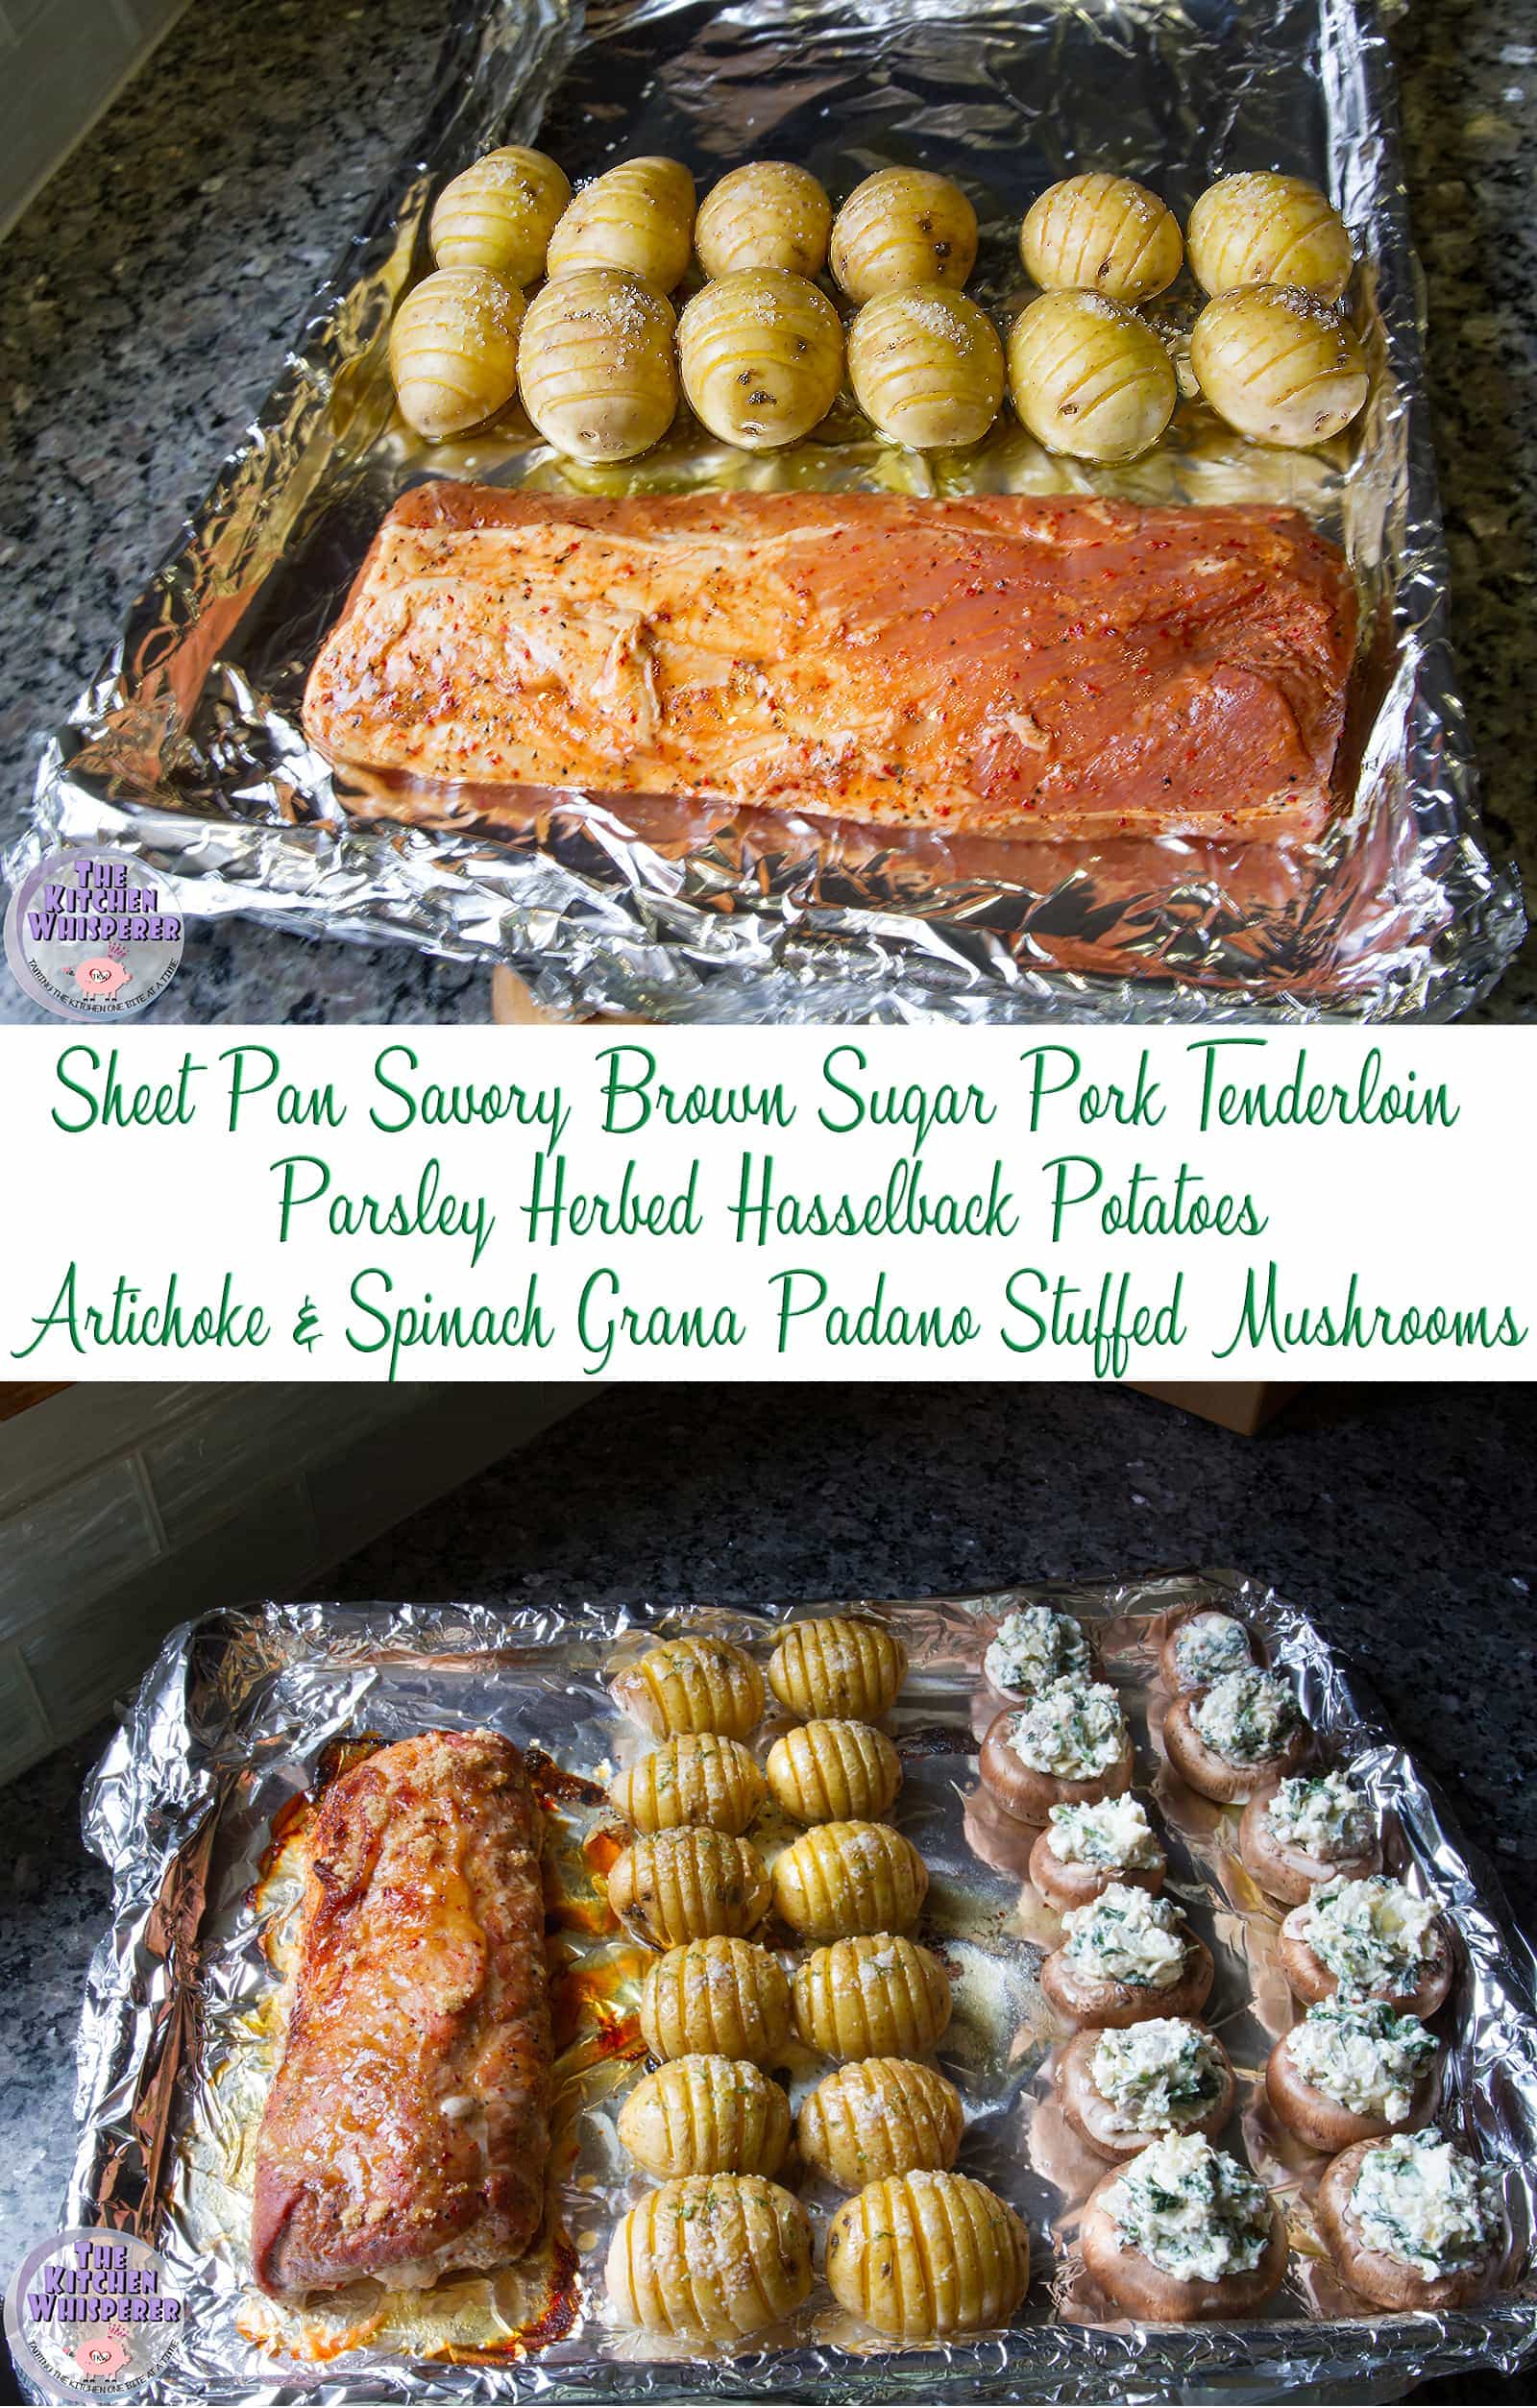 Sheet Pan Savory Brown Sugar Pork Tenderloin with Hasselback Potatoes and Stuffed Mushrooms